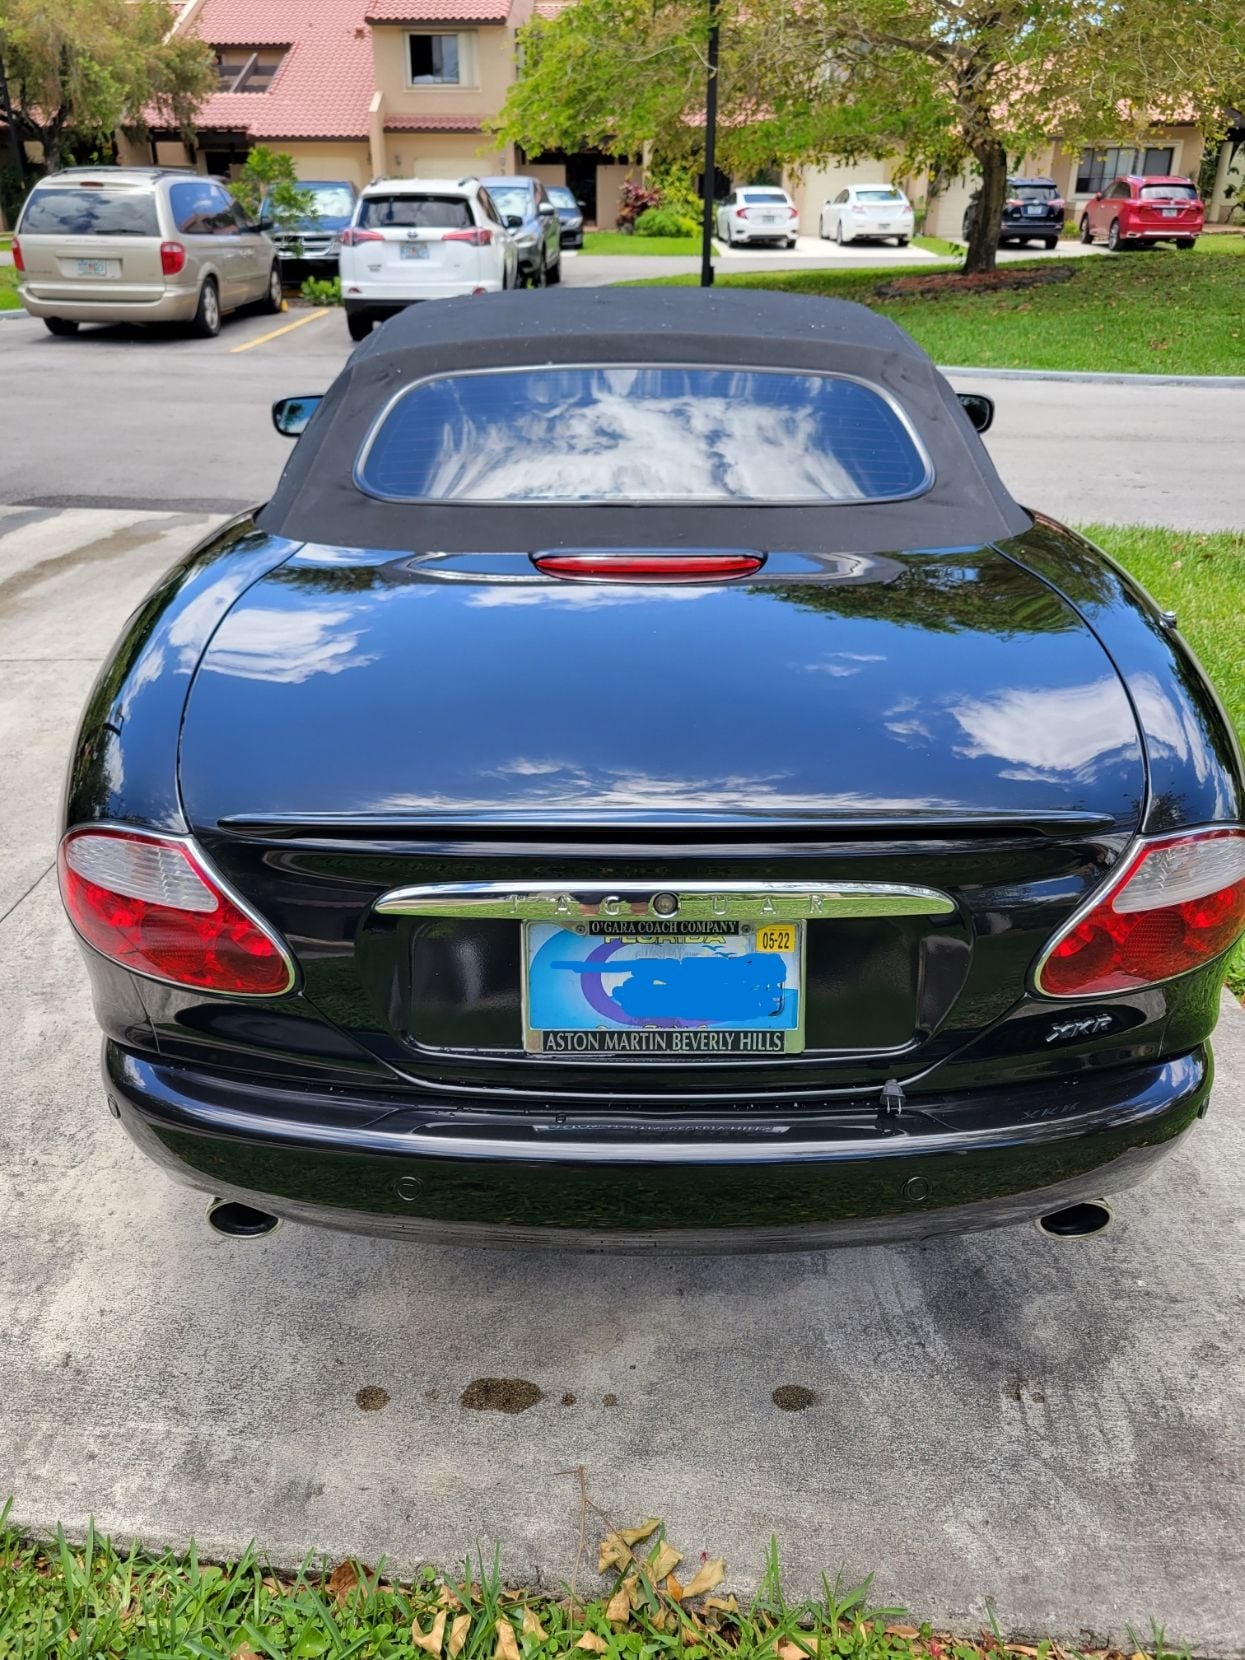 2002 Jaguar XKR - 2002 Jaguar XKR Convertible, metal Anthracite Black Exterior, black Leather interior - Used - VIN SAJDA42B32PA26563 - 61,000 Miles - 8 cyl - 2WD - Automatic - Convertible - Black - Miami, Fl, Usa, FL 33178, United States